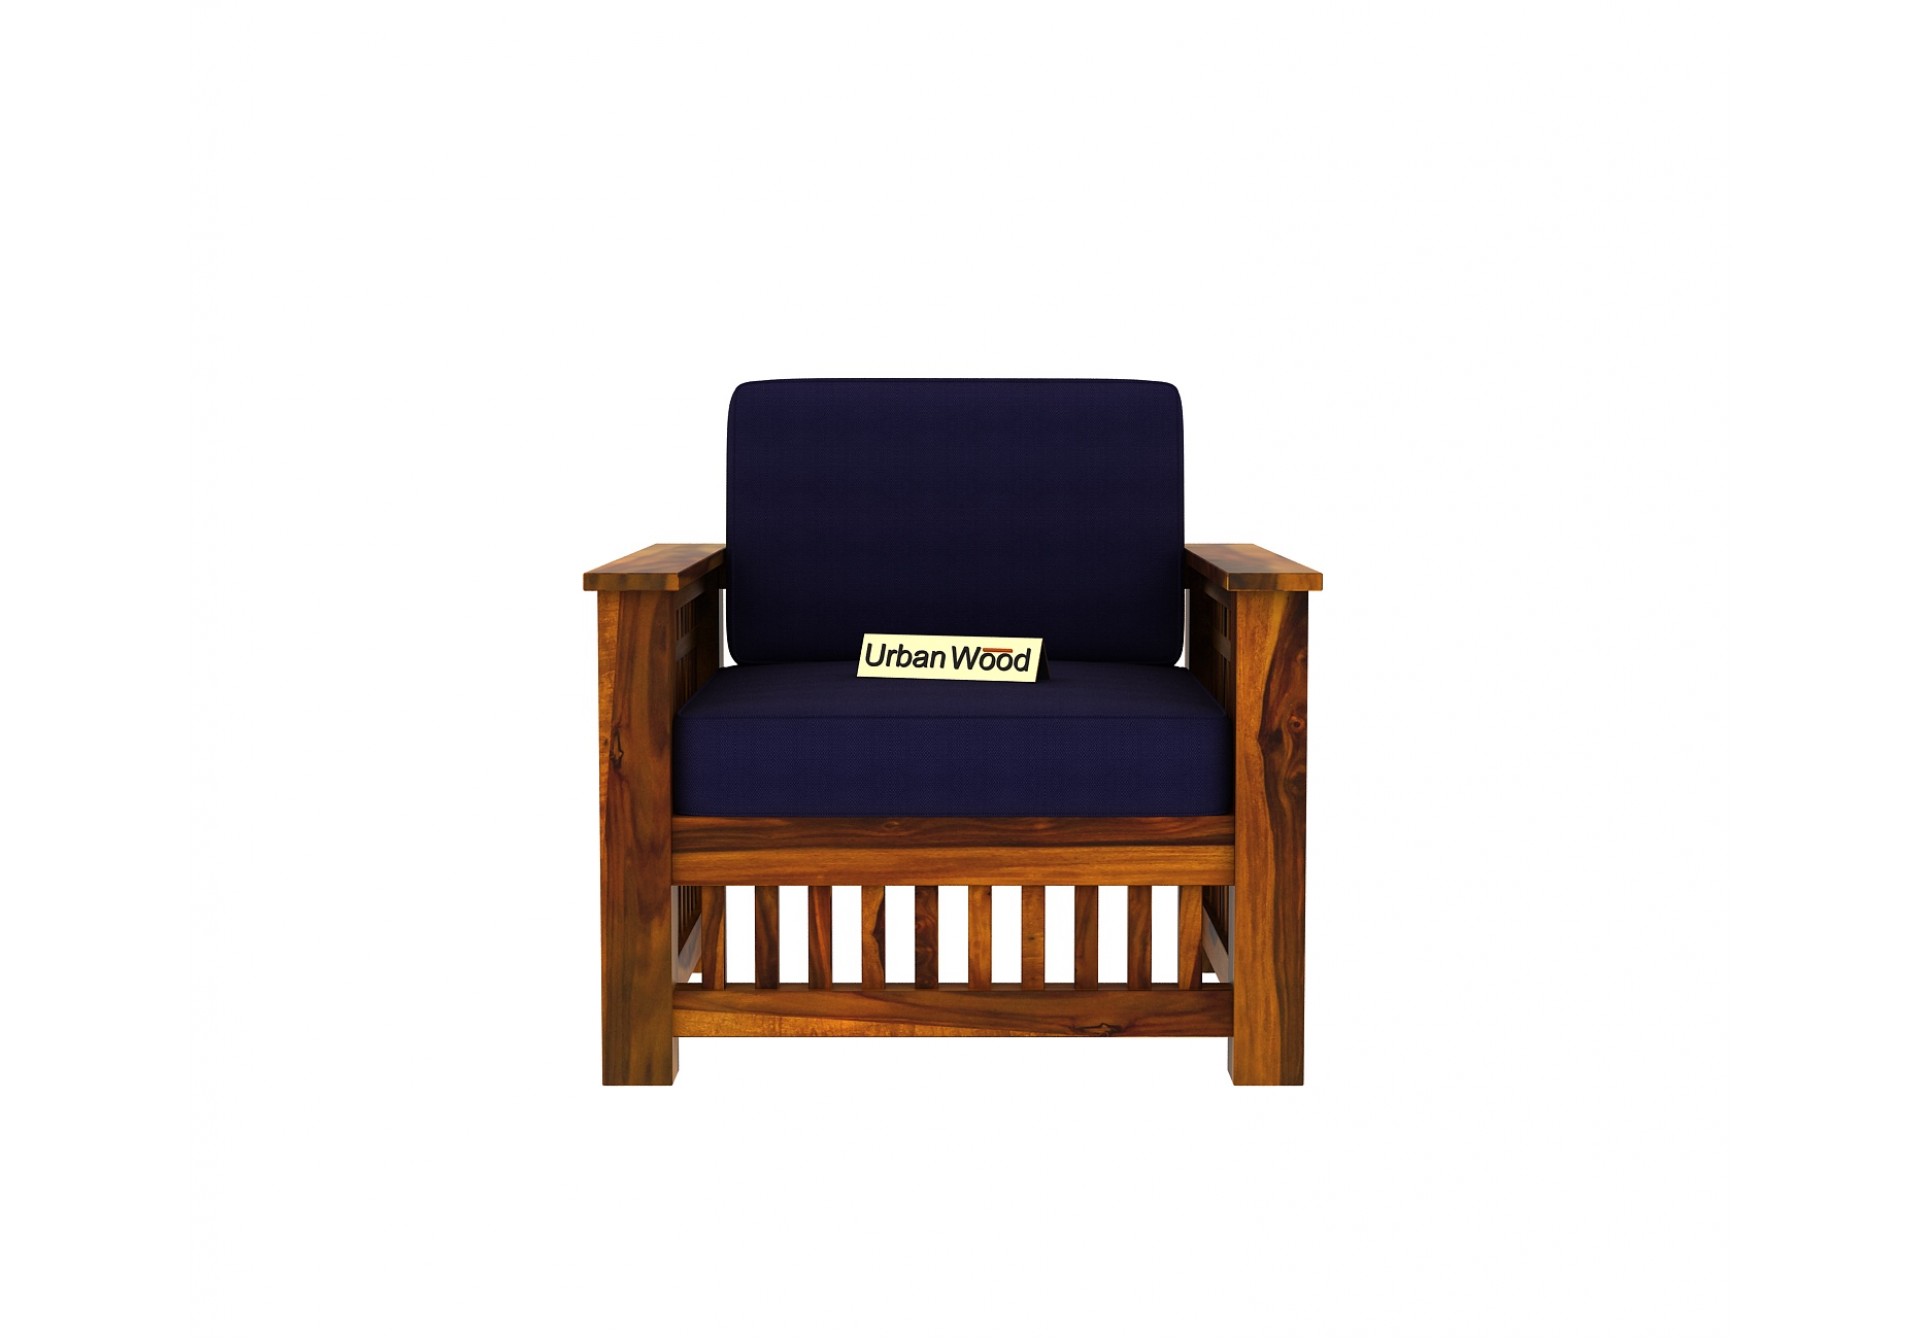 HomeBregg Wooden Sofa Set 3+1+1 Seater ( Honey Finish, Navy Blue )